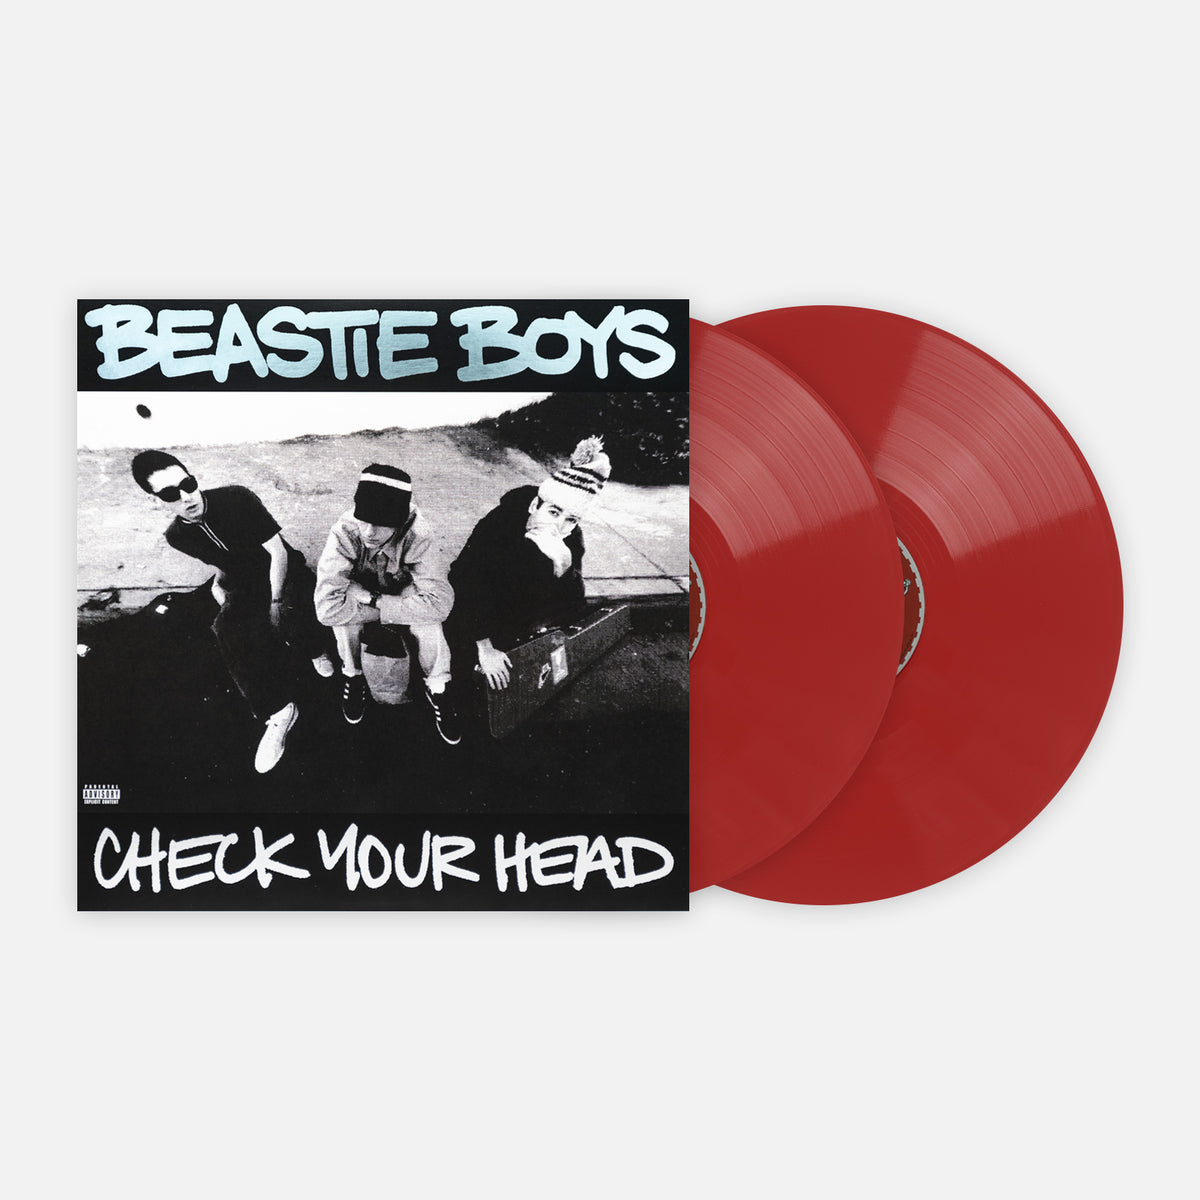 Hver uge kold motto Beastie Boys 'Check Your Head' - Vinyl Me, Please